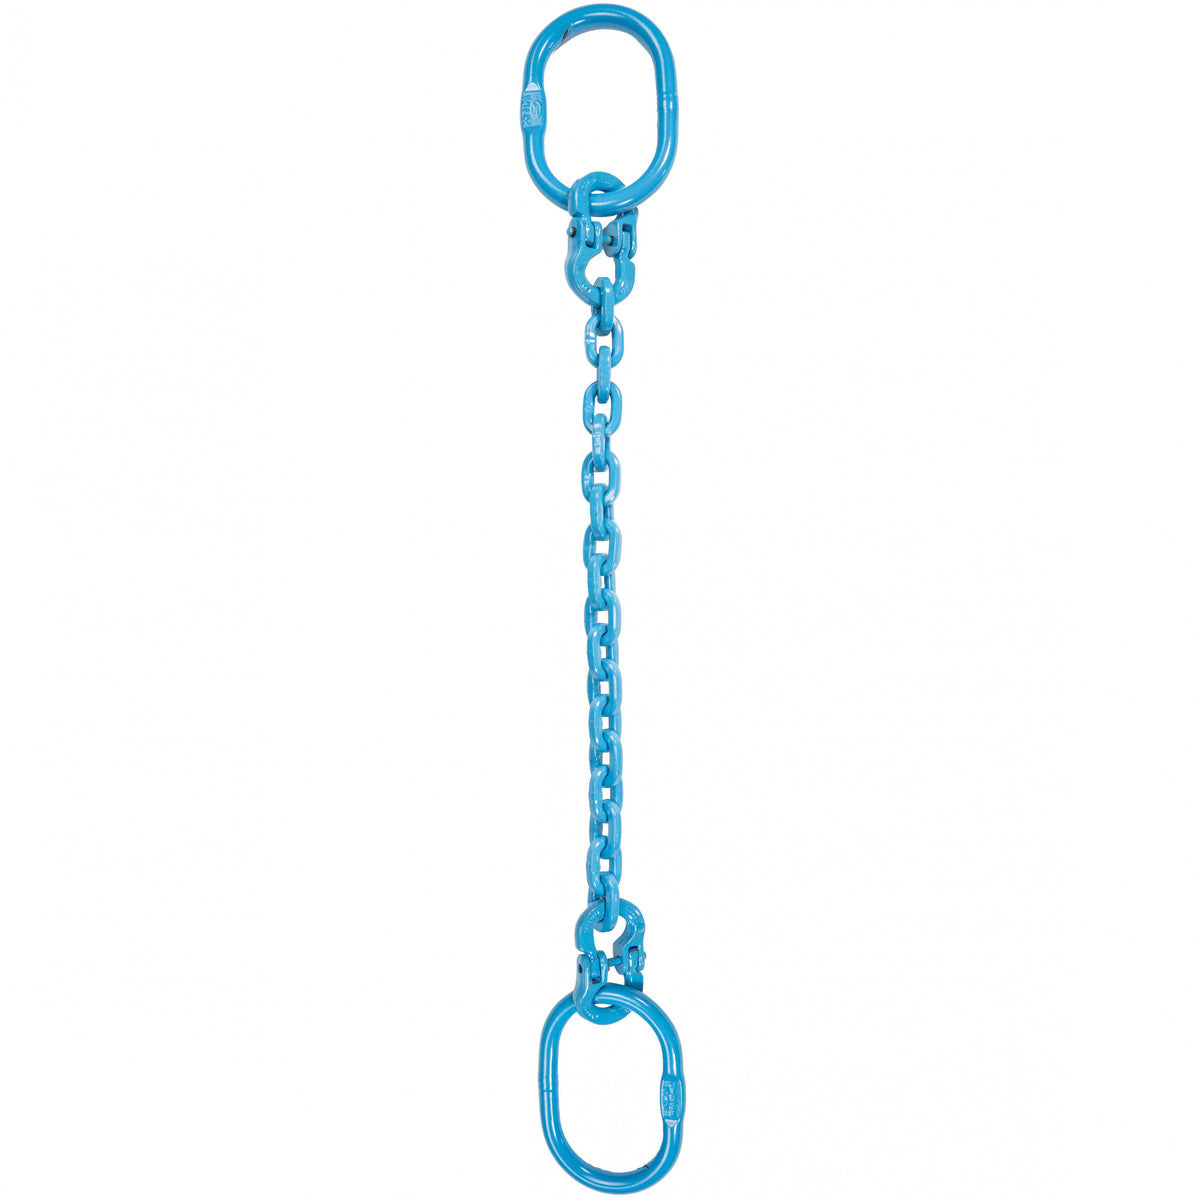 9/32" x 5' - Pewag Single Leg Chain Sling w/ Oblong Master Links - Grade 120